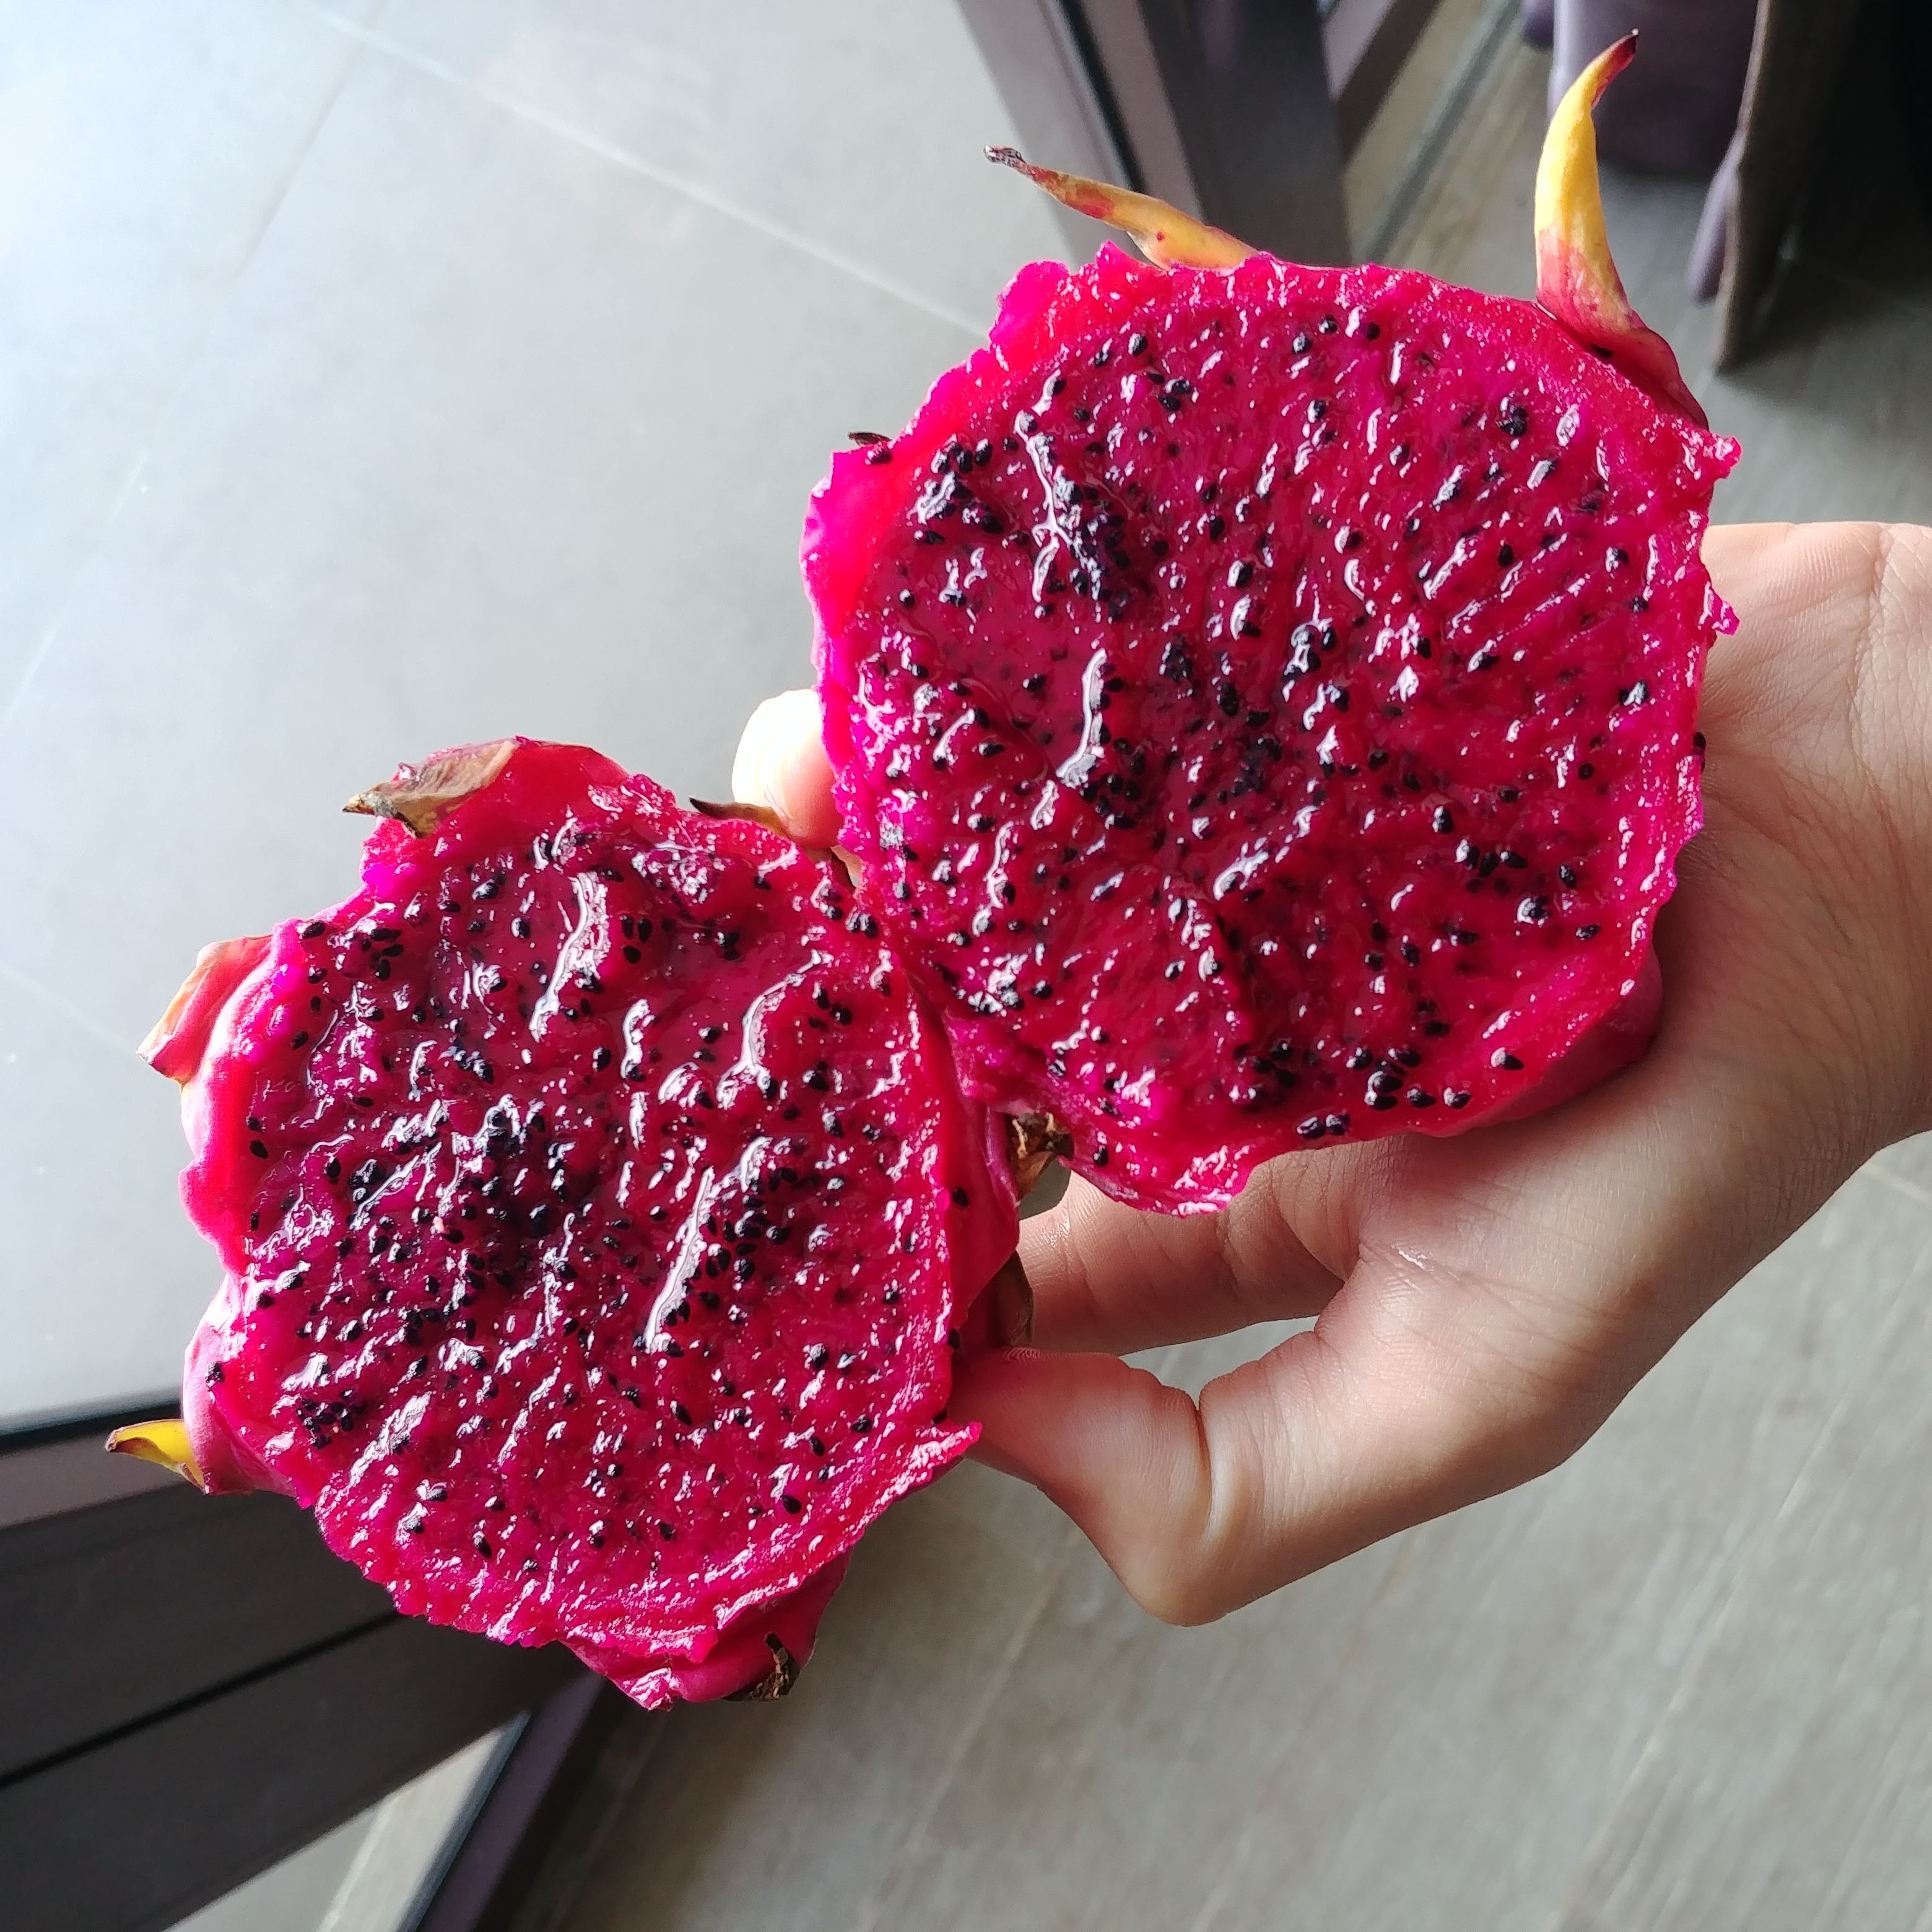 dragonfruit pitaya 용과 드래곤푸르츠